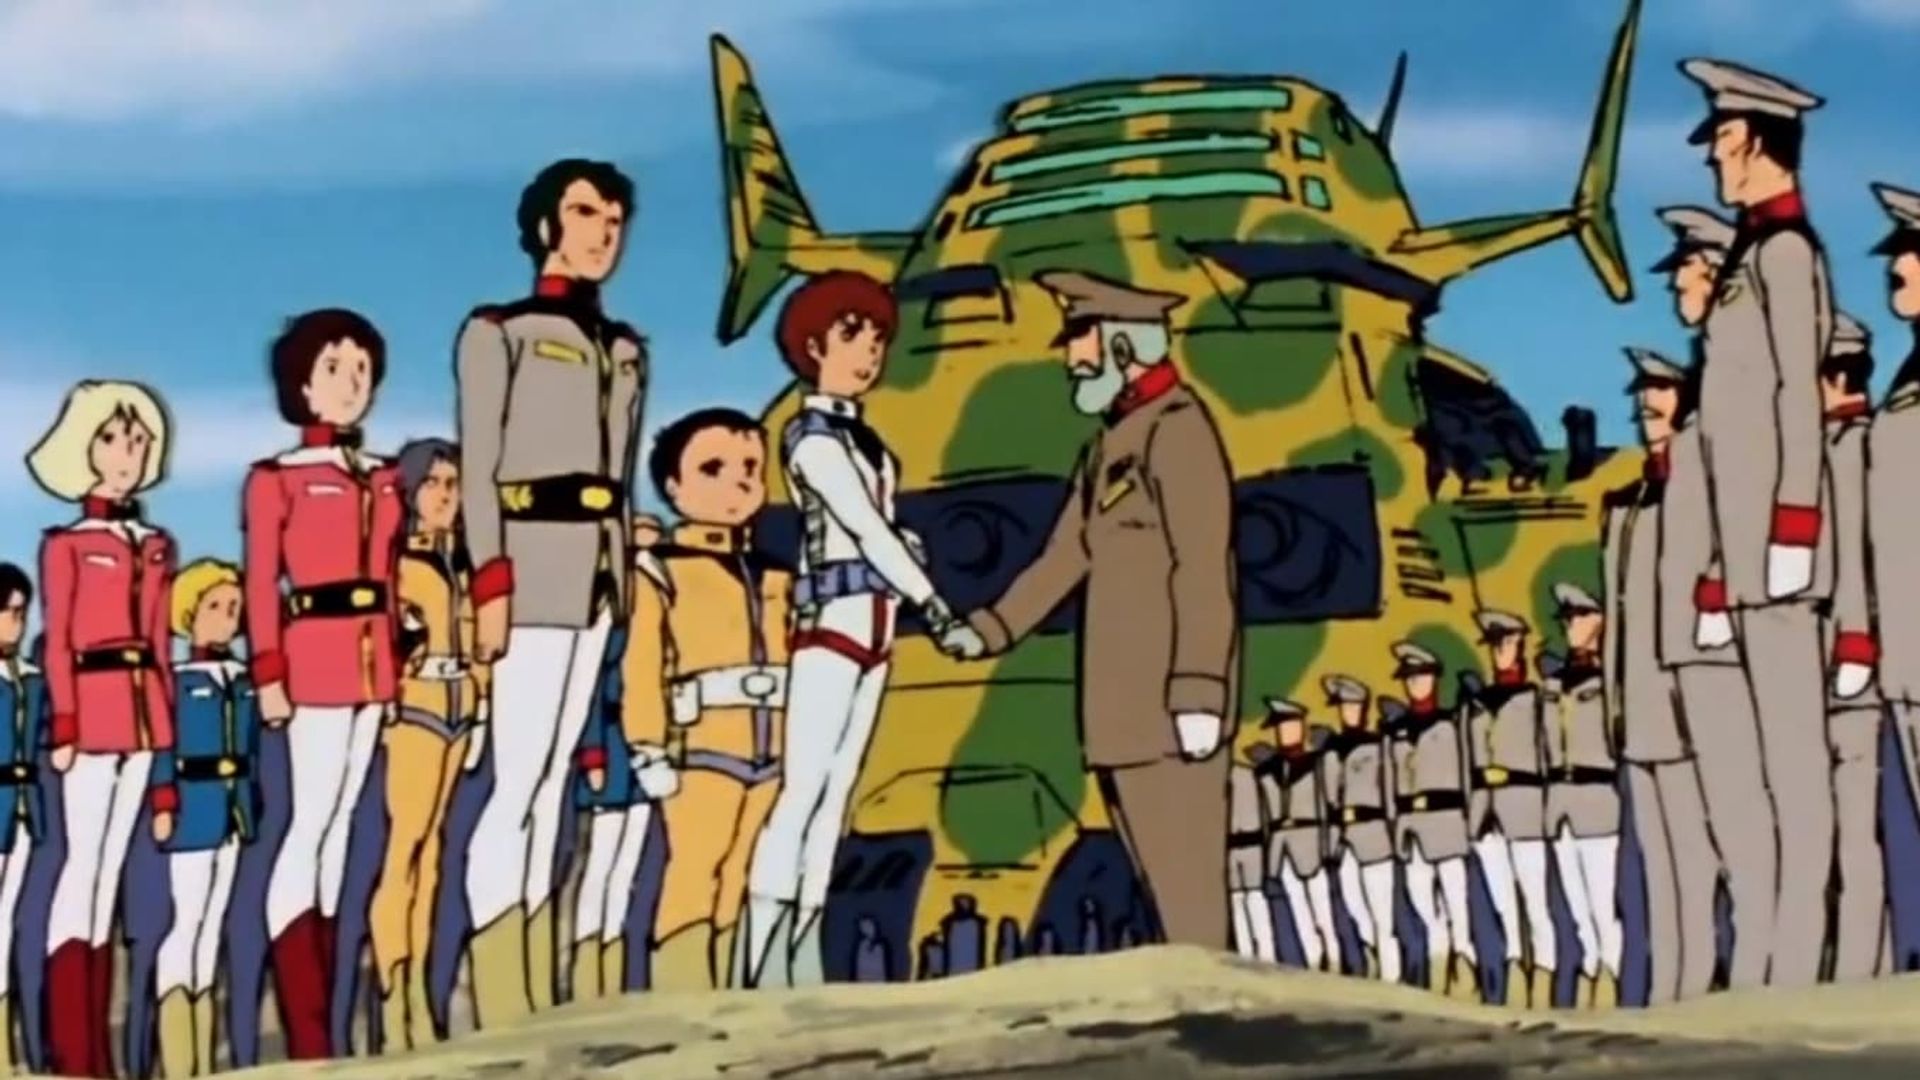 Mobile Suit Gundam background